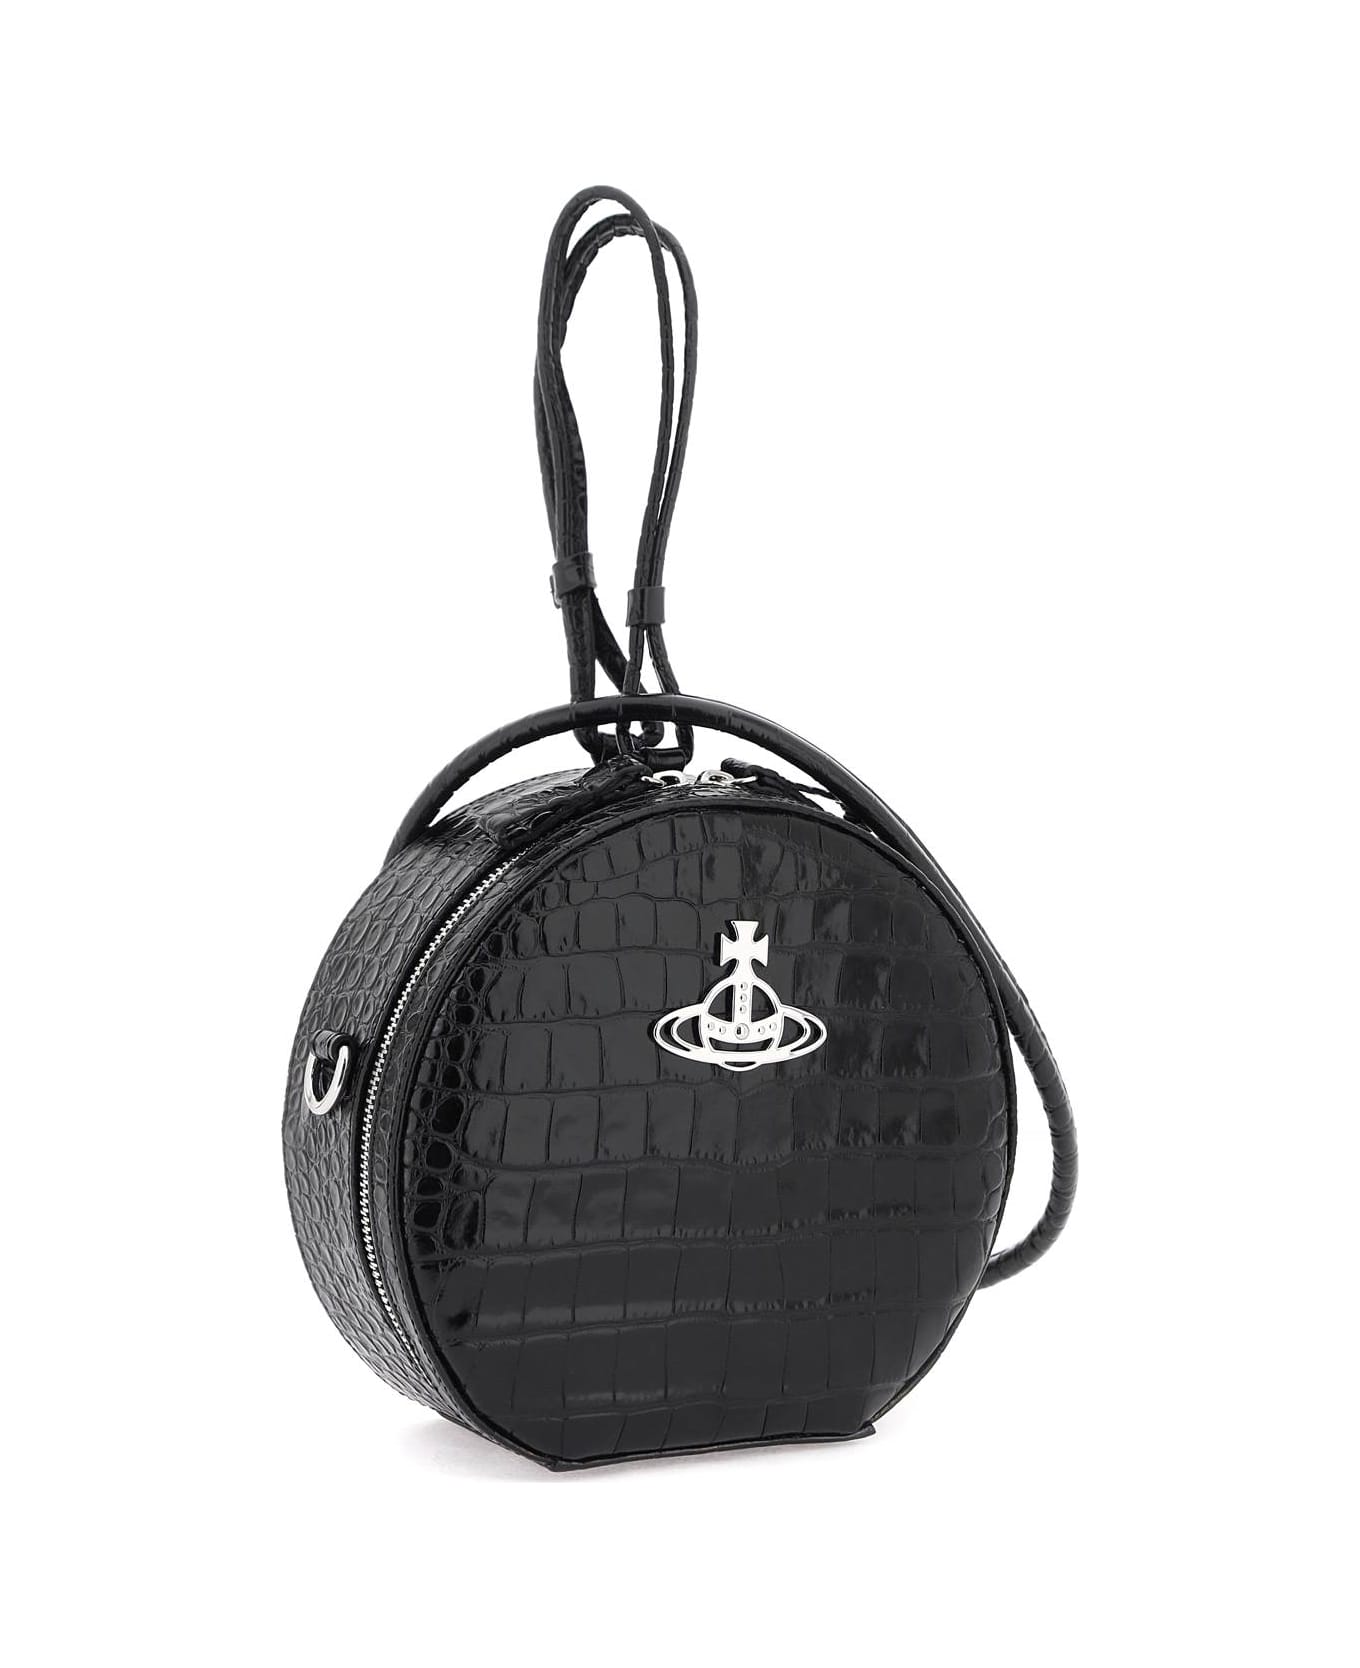 Vivienne Westwood Hattie Handbag - BLACK (Black)